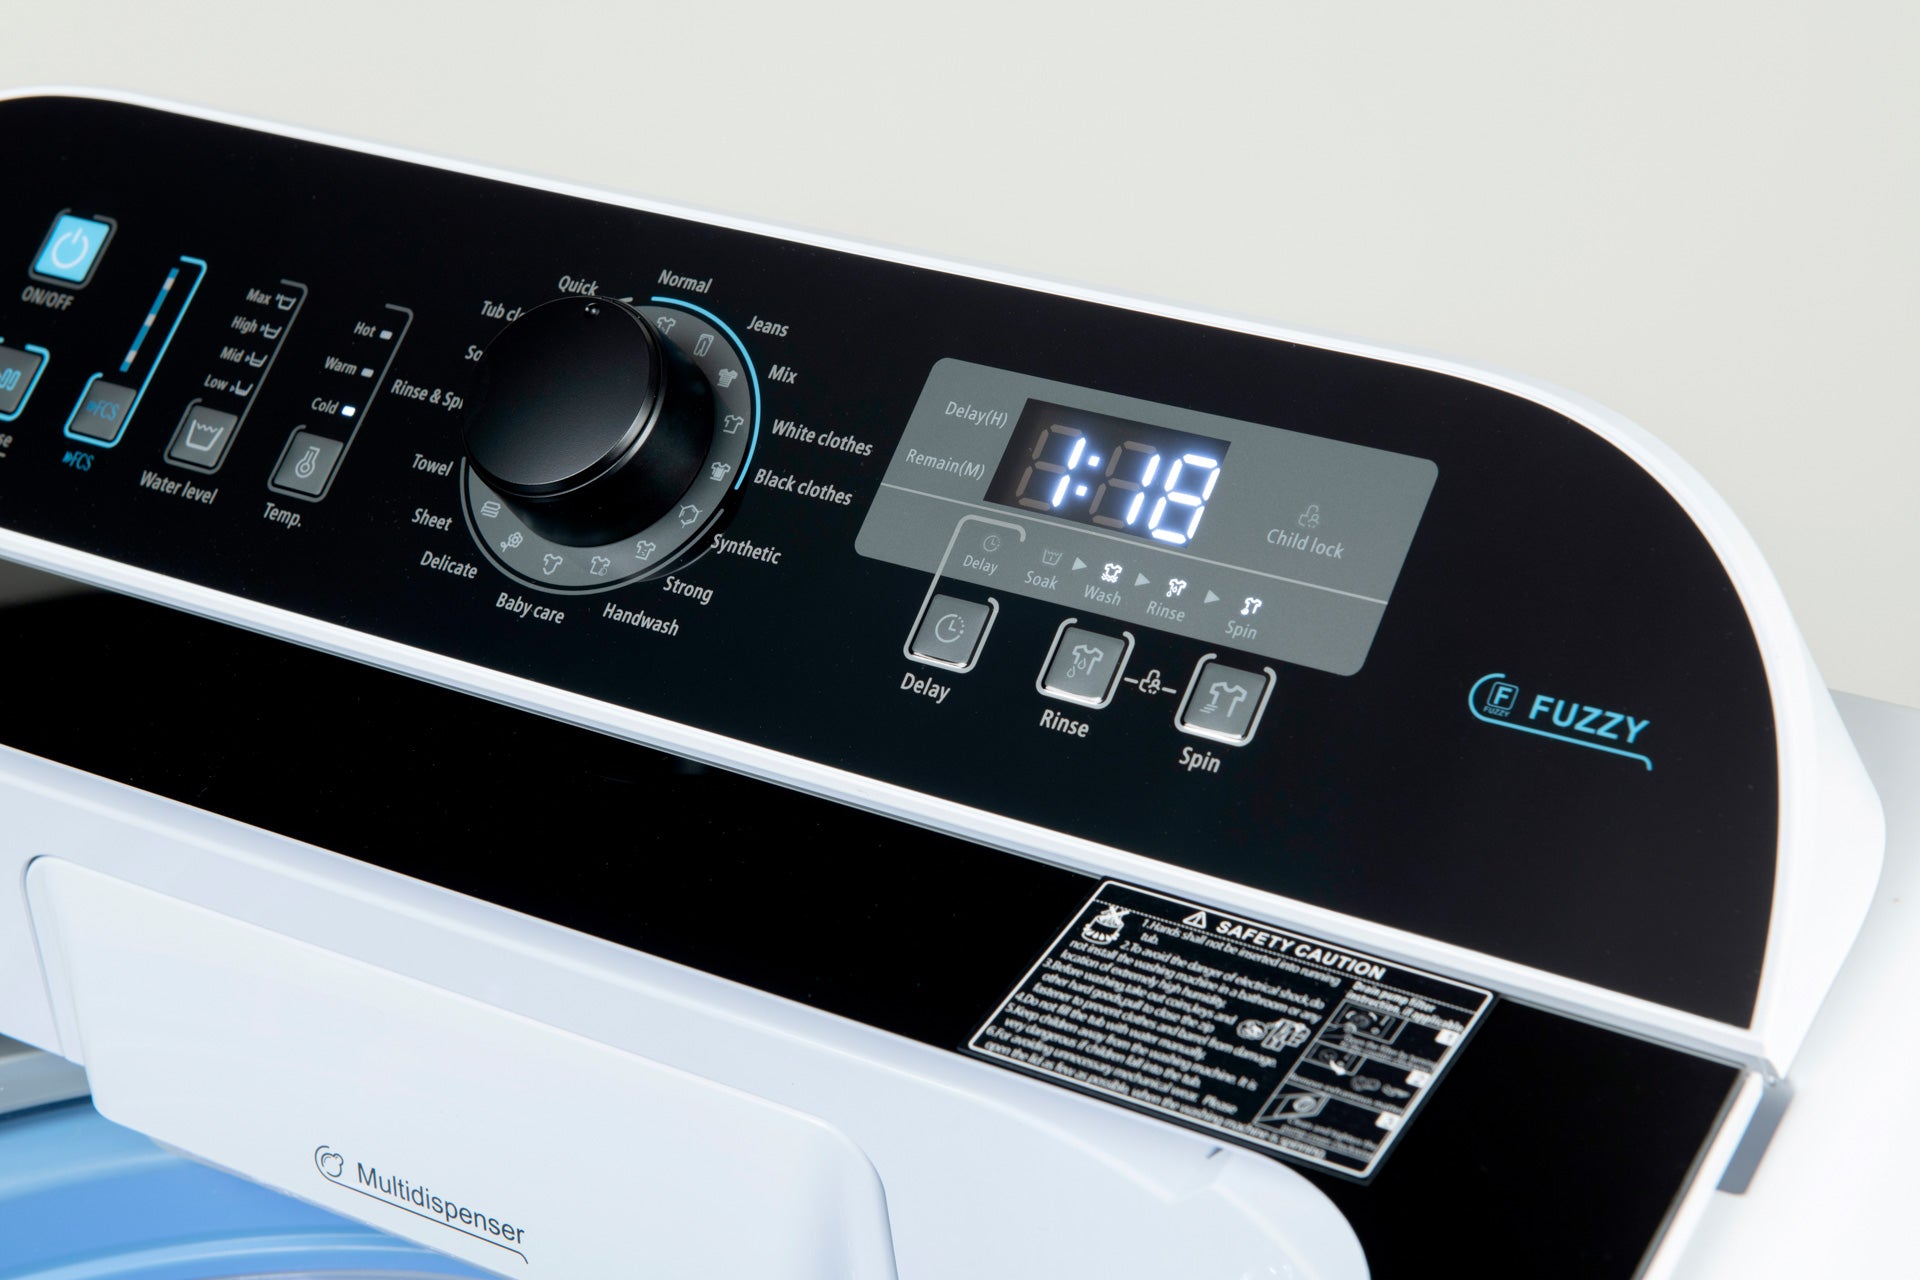 Euro Appliances 12kg Top Load Washing Machine ETL12KWH